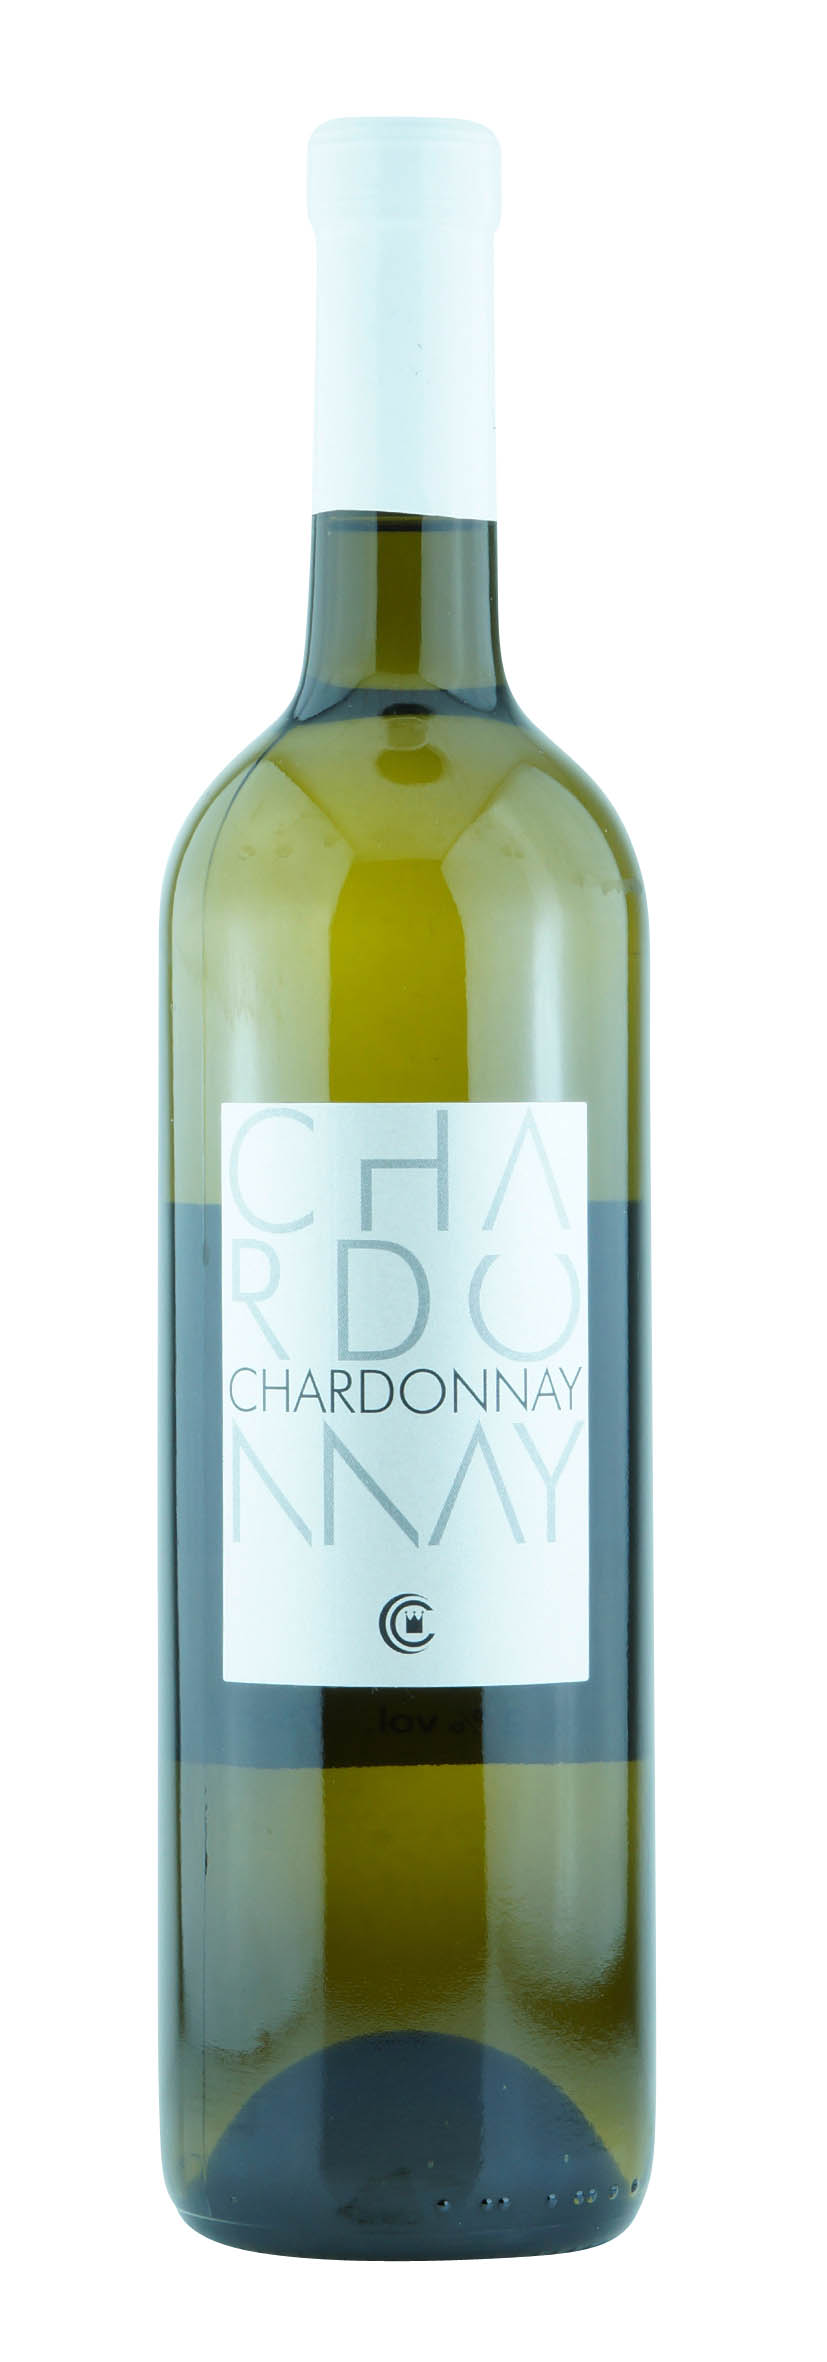 Ticino DOC Chardonnay 2016